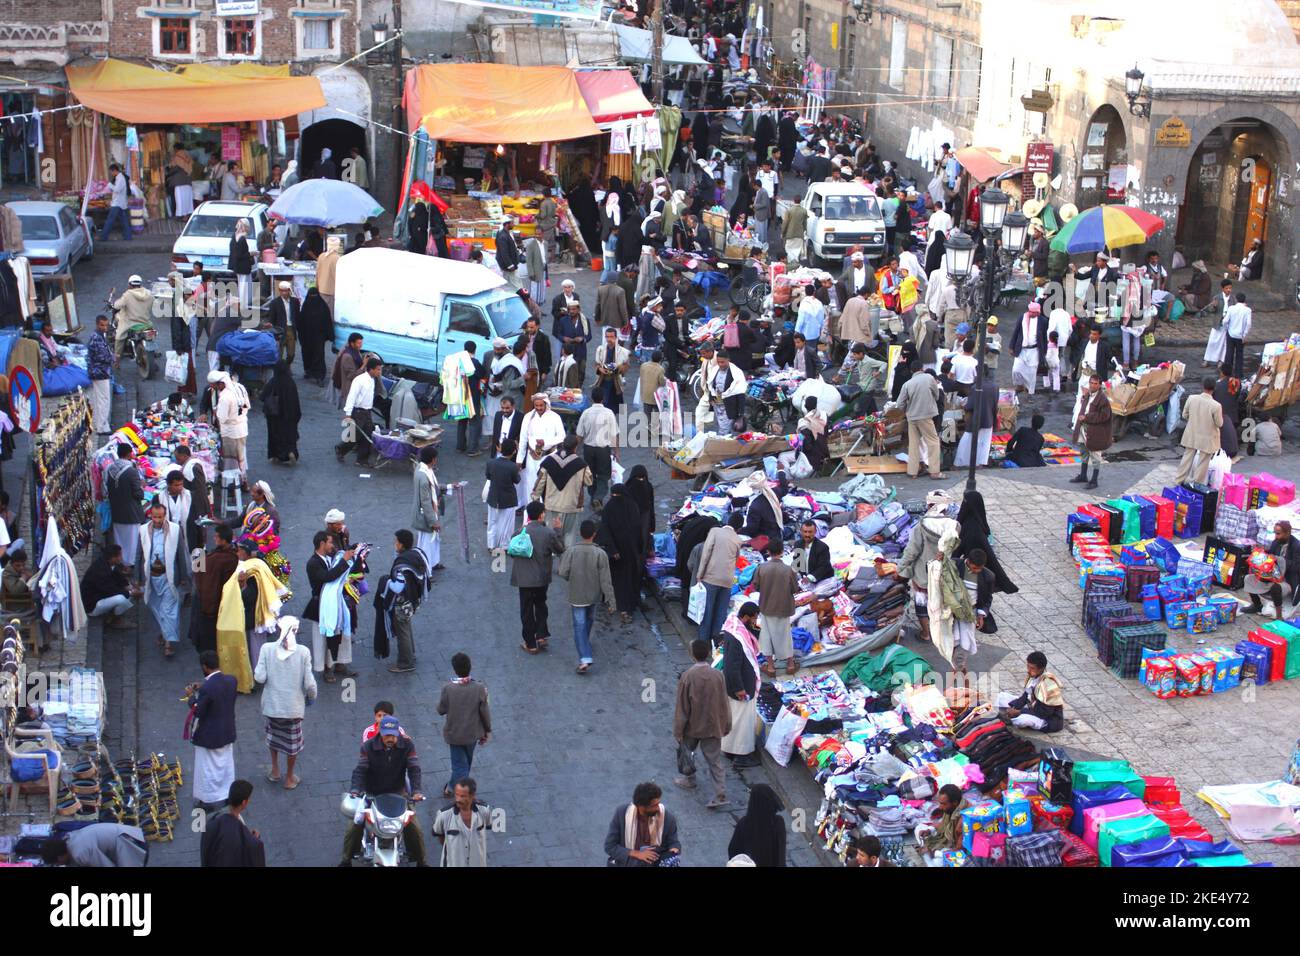 Vendors and shoppers, Bab al Yaman, old city Sanaa, Yemen Stock Photo